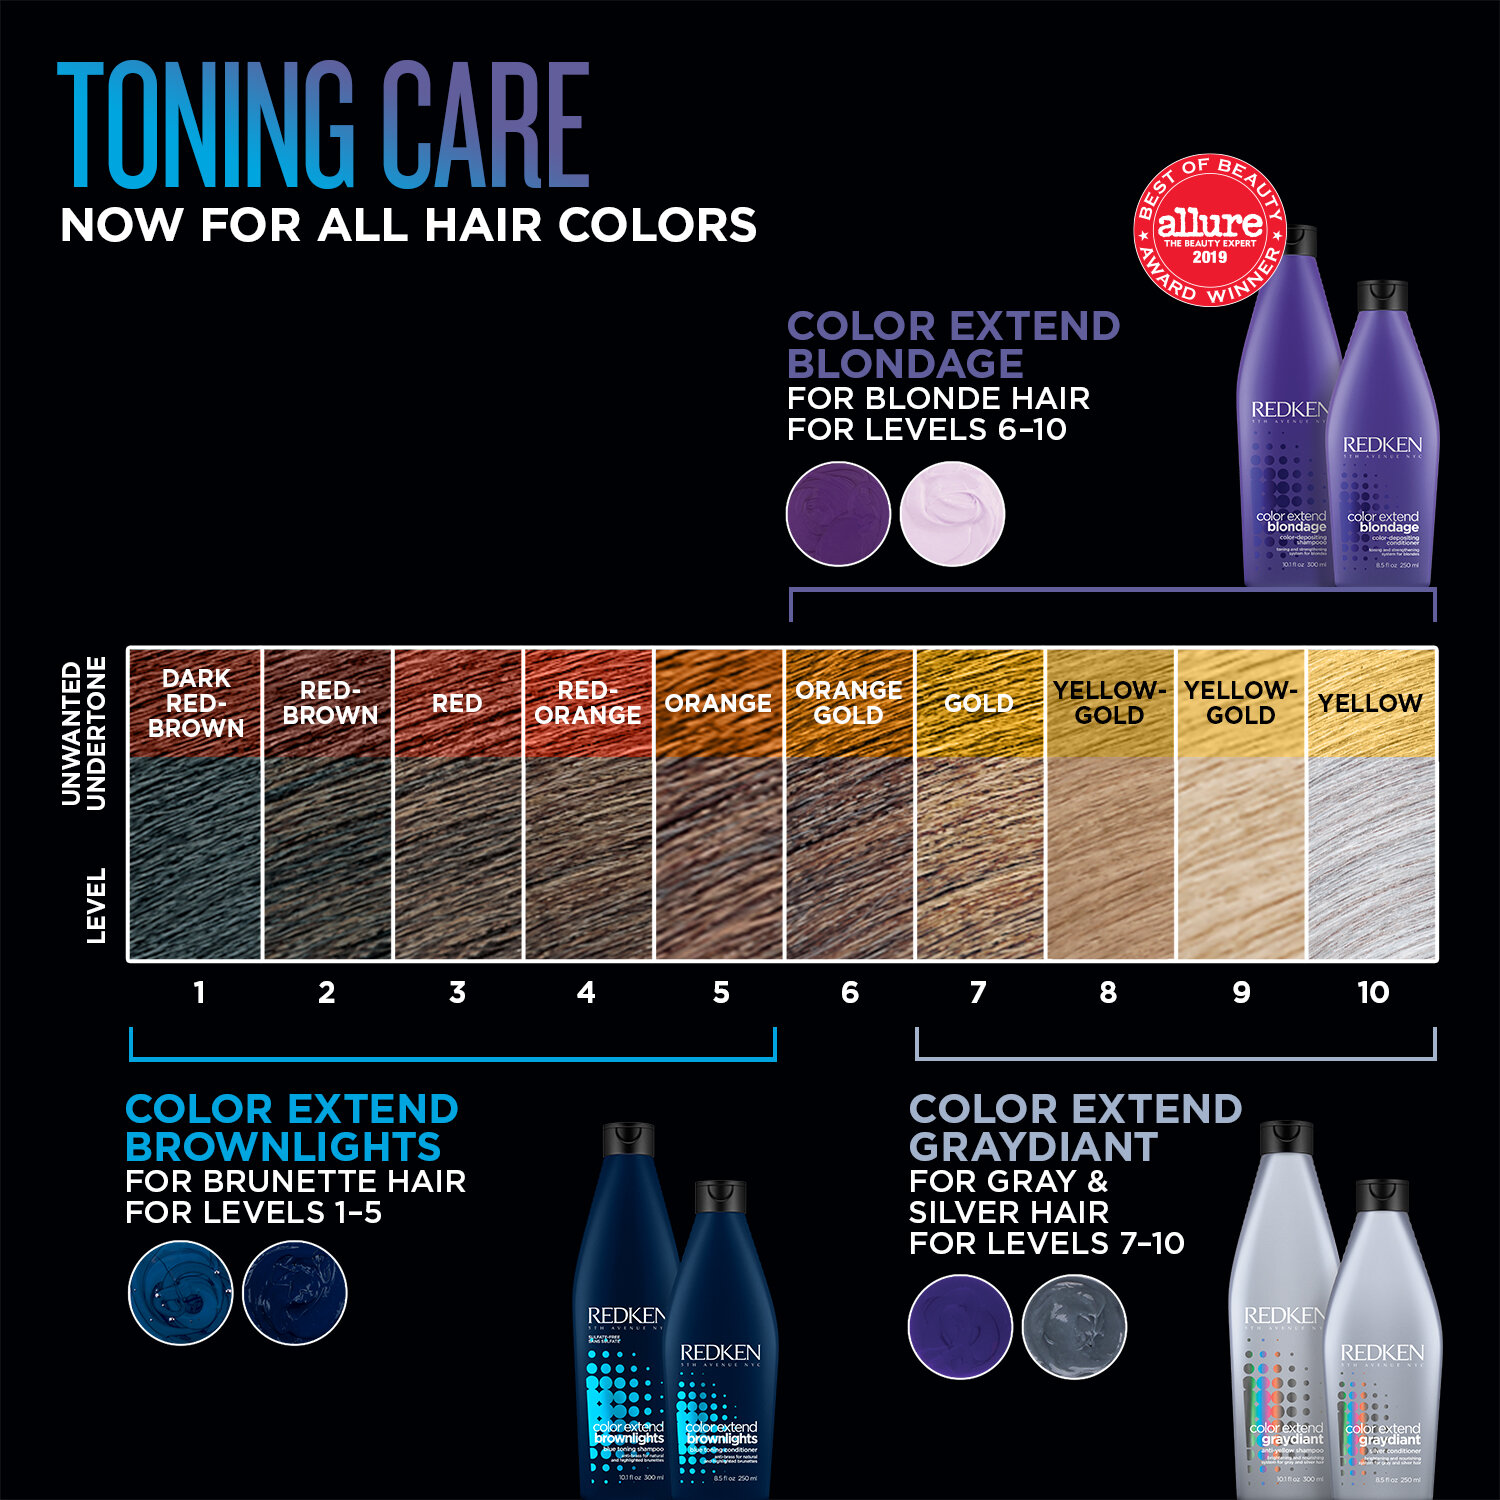 Redken-2020-US-Amazon-Color-Care-Toning-Care-Tile-1500x1500.jpg